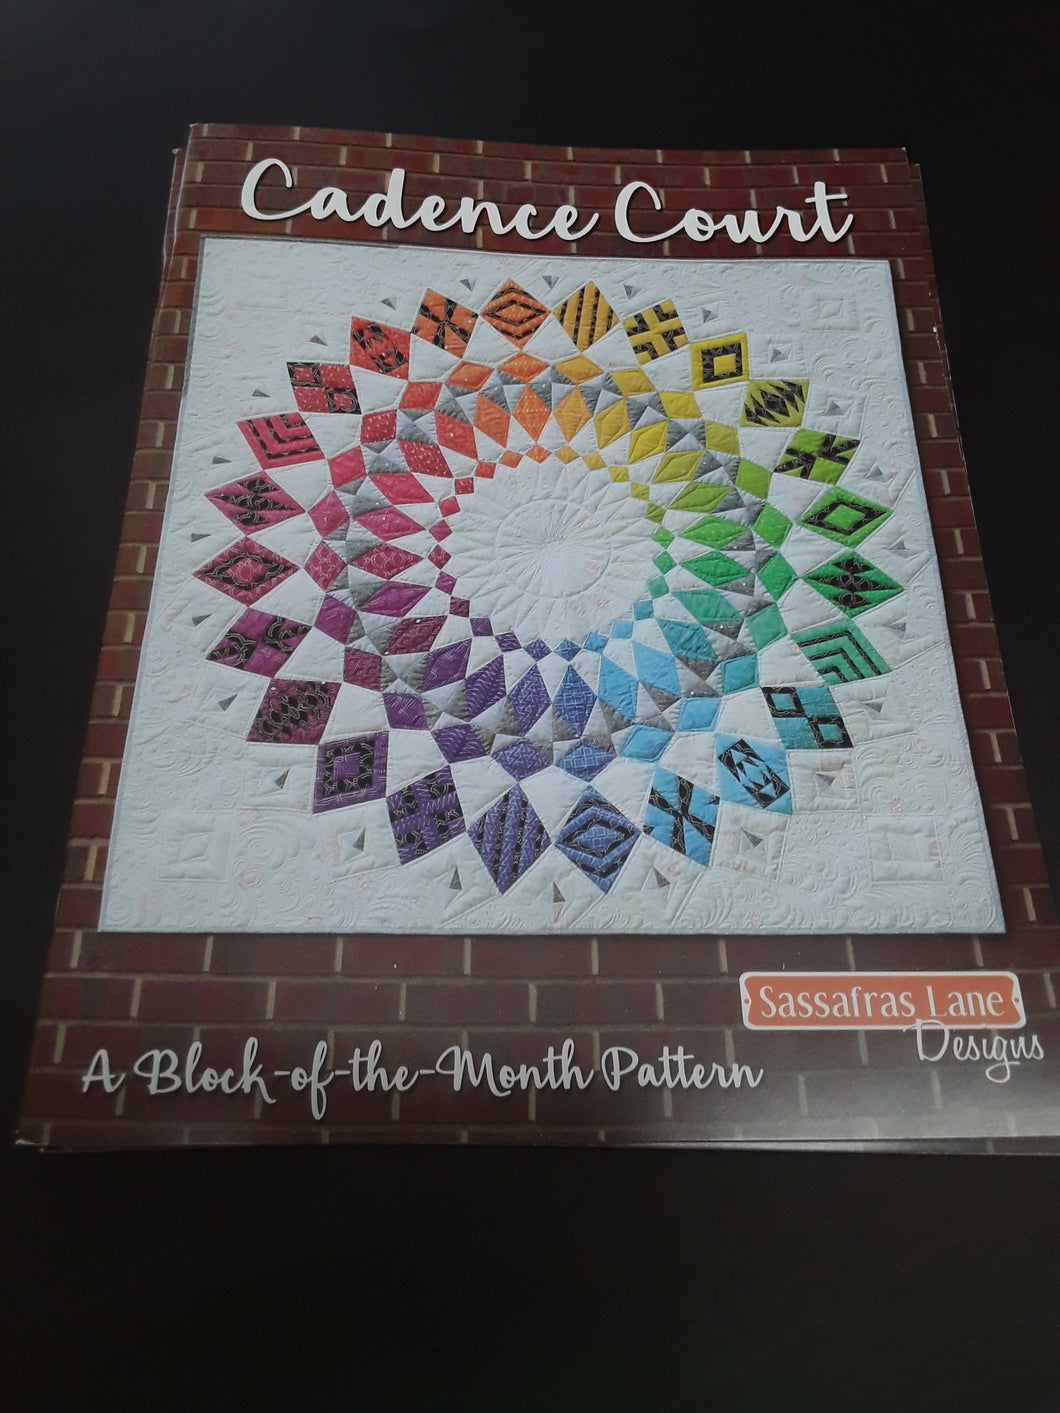 Cadence Court